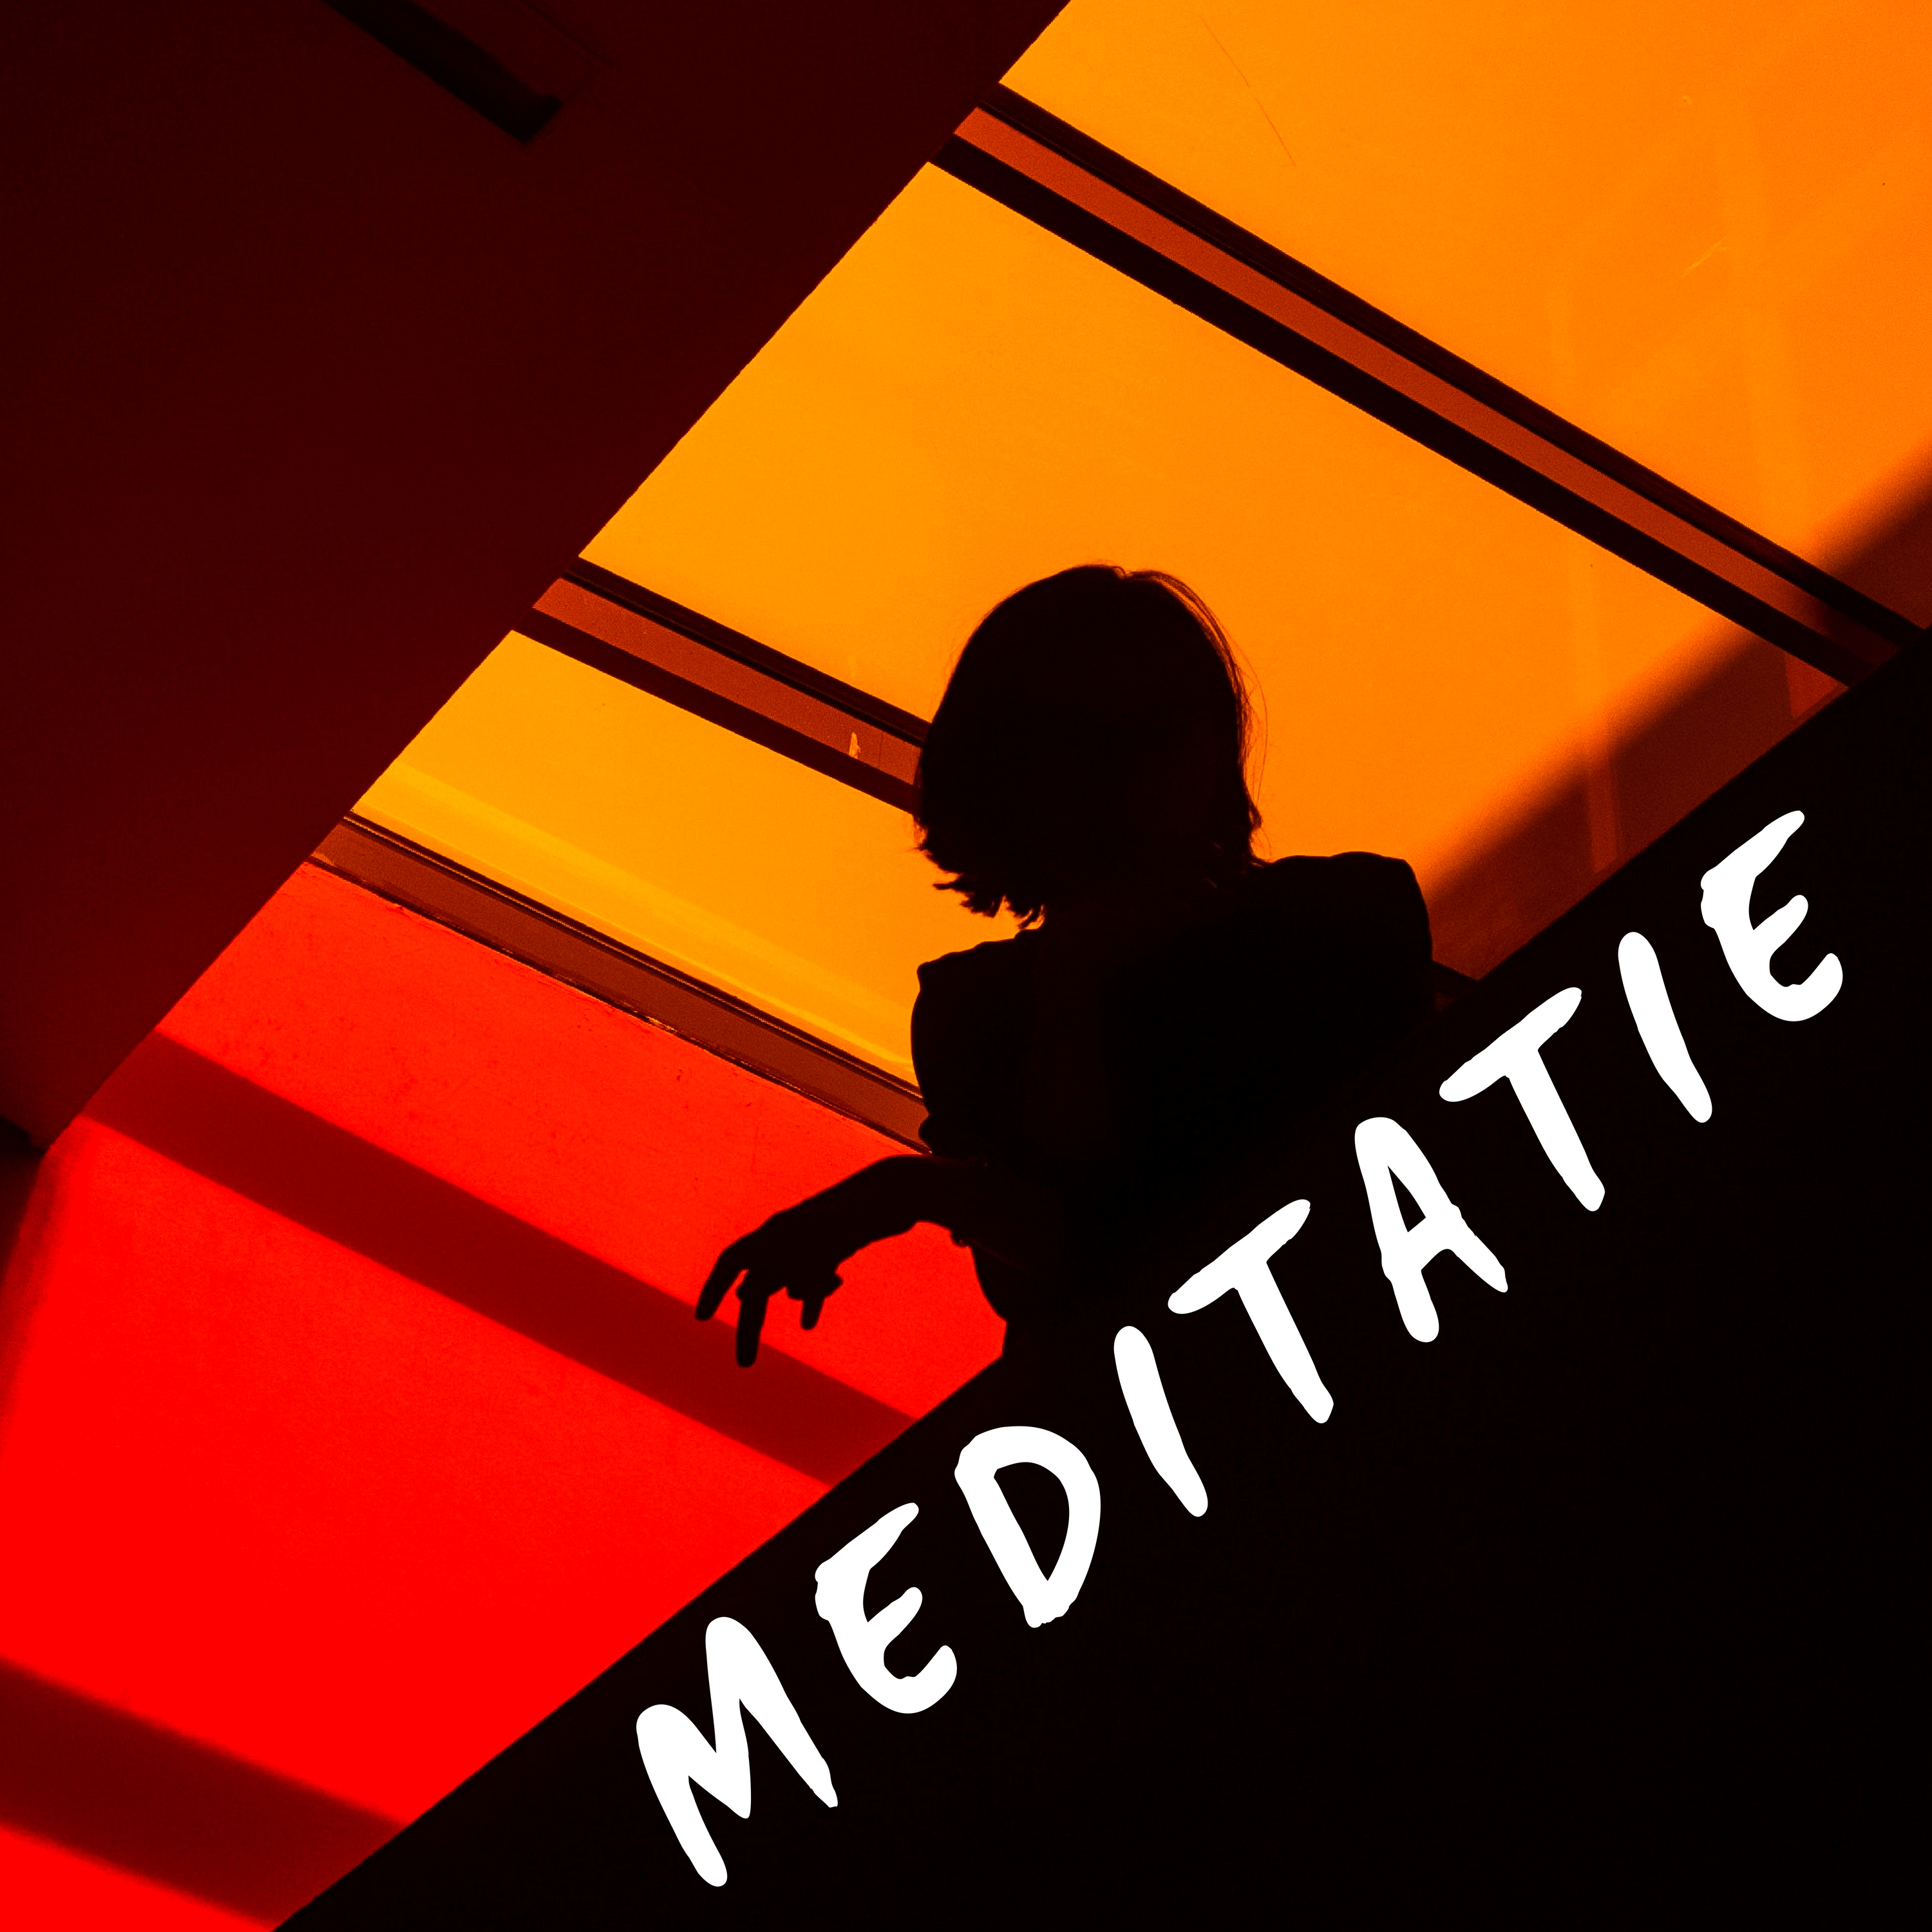 Meditatie 1 UUR - simpele meditatie tips, ontspannende muziek